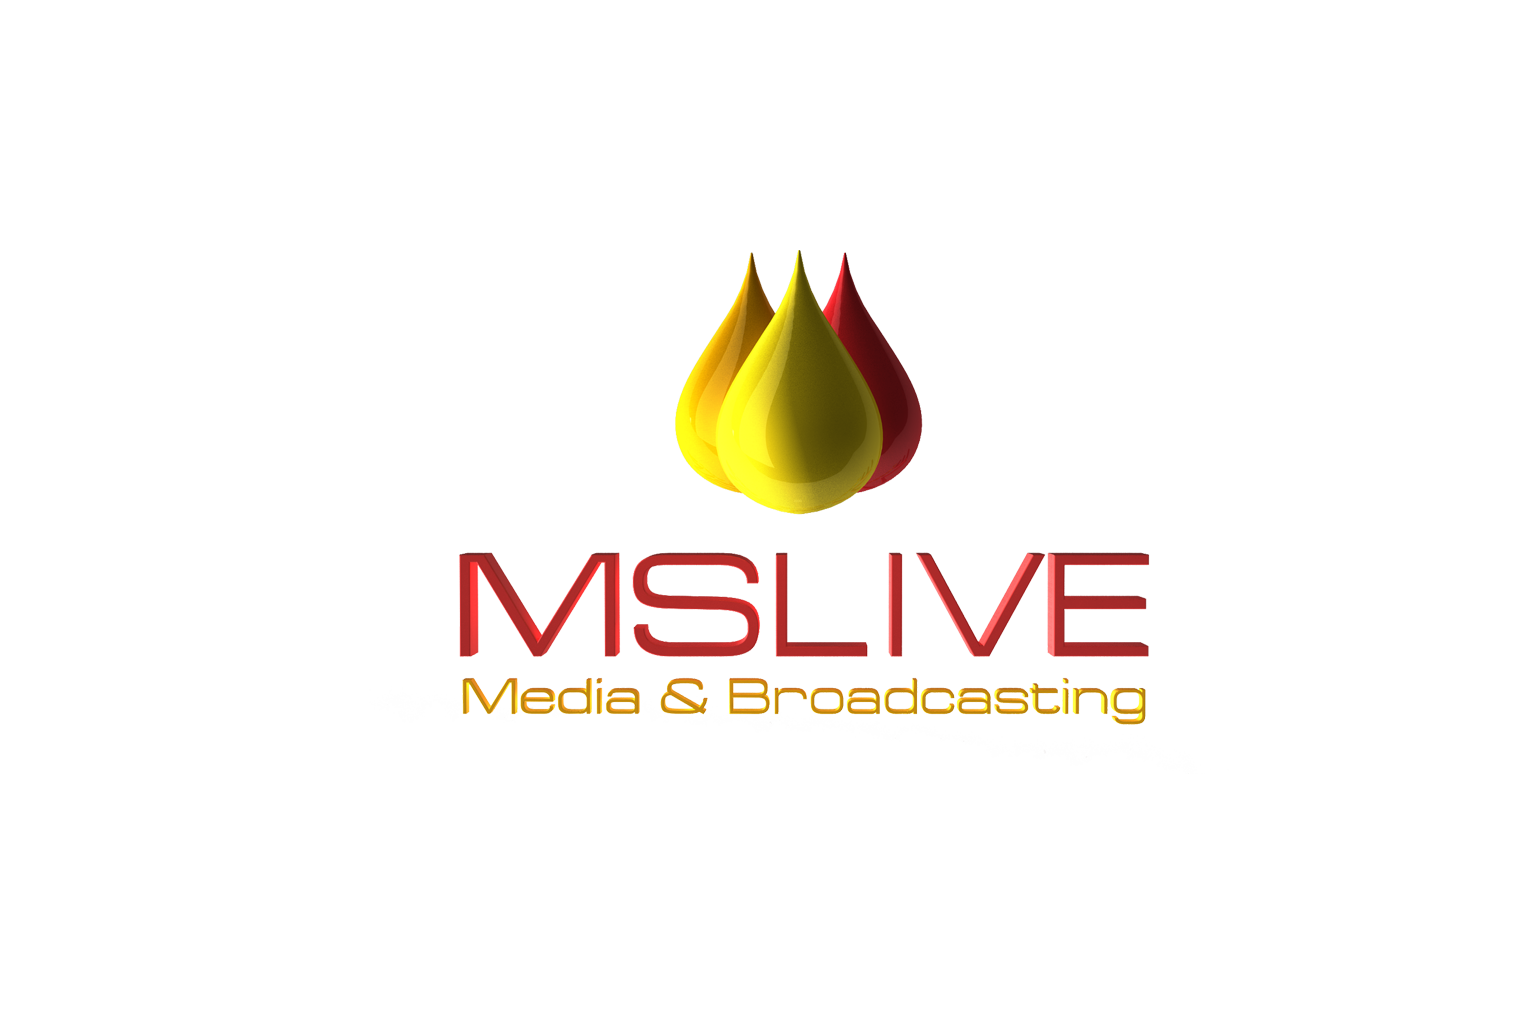 Live Streaming Server provider | Live streaming service provider - MSLIVE